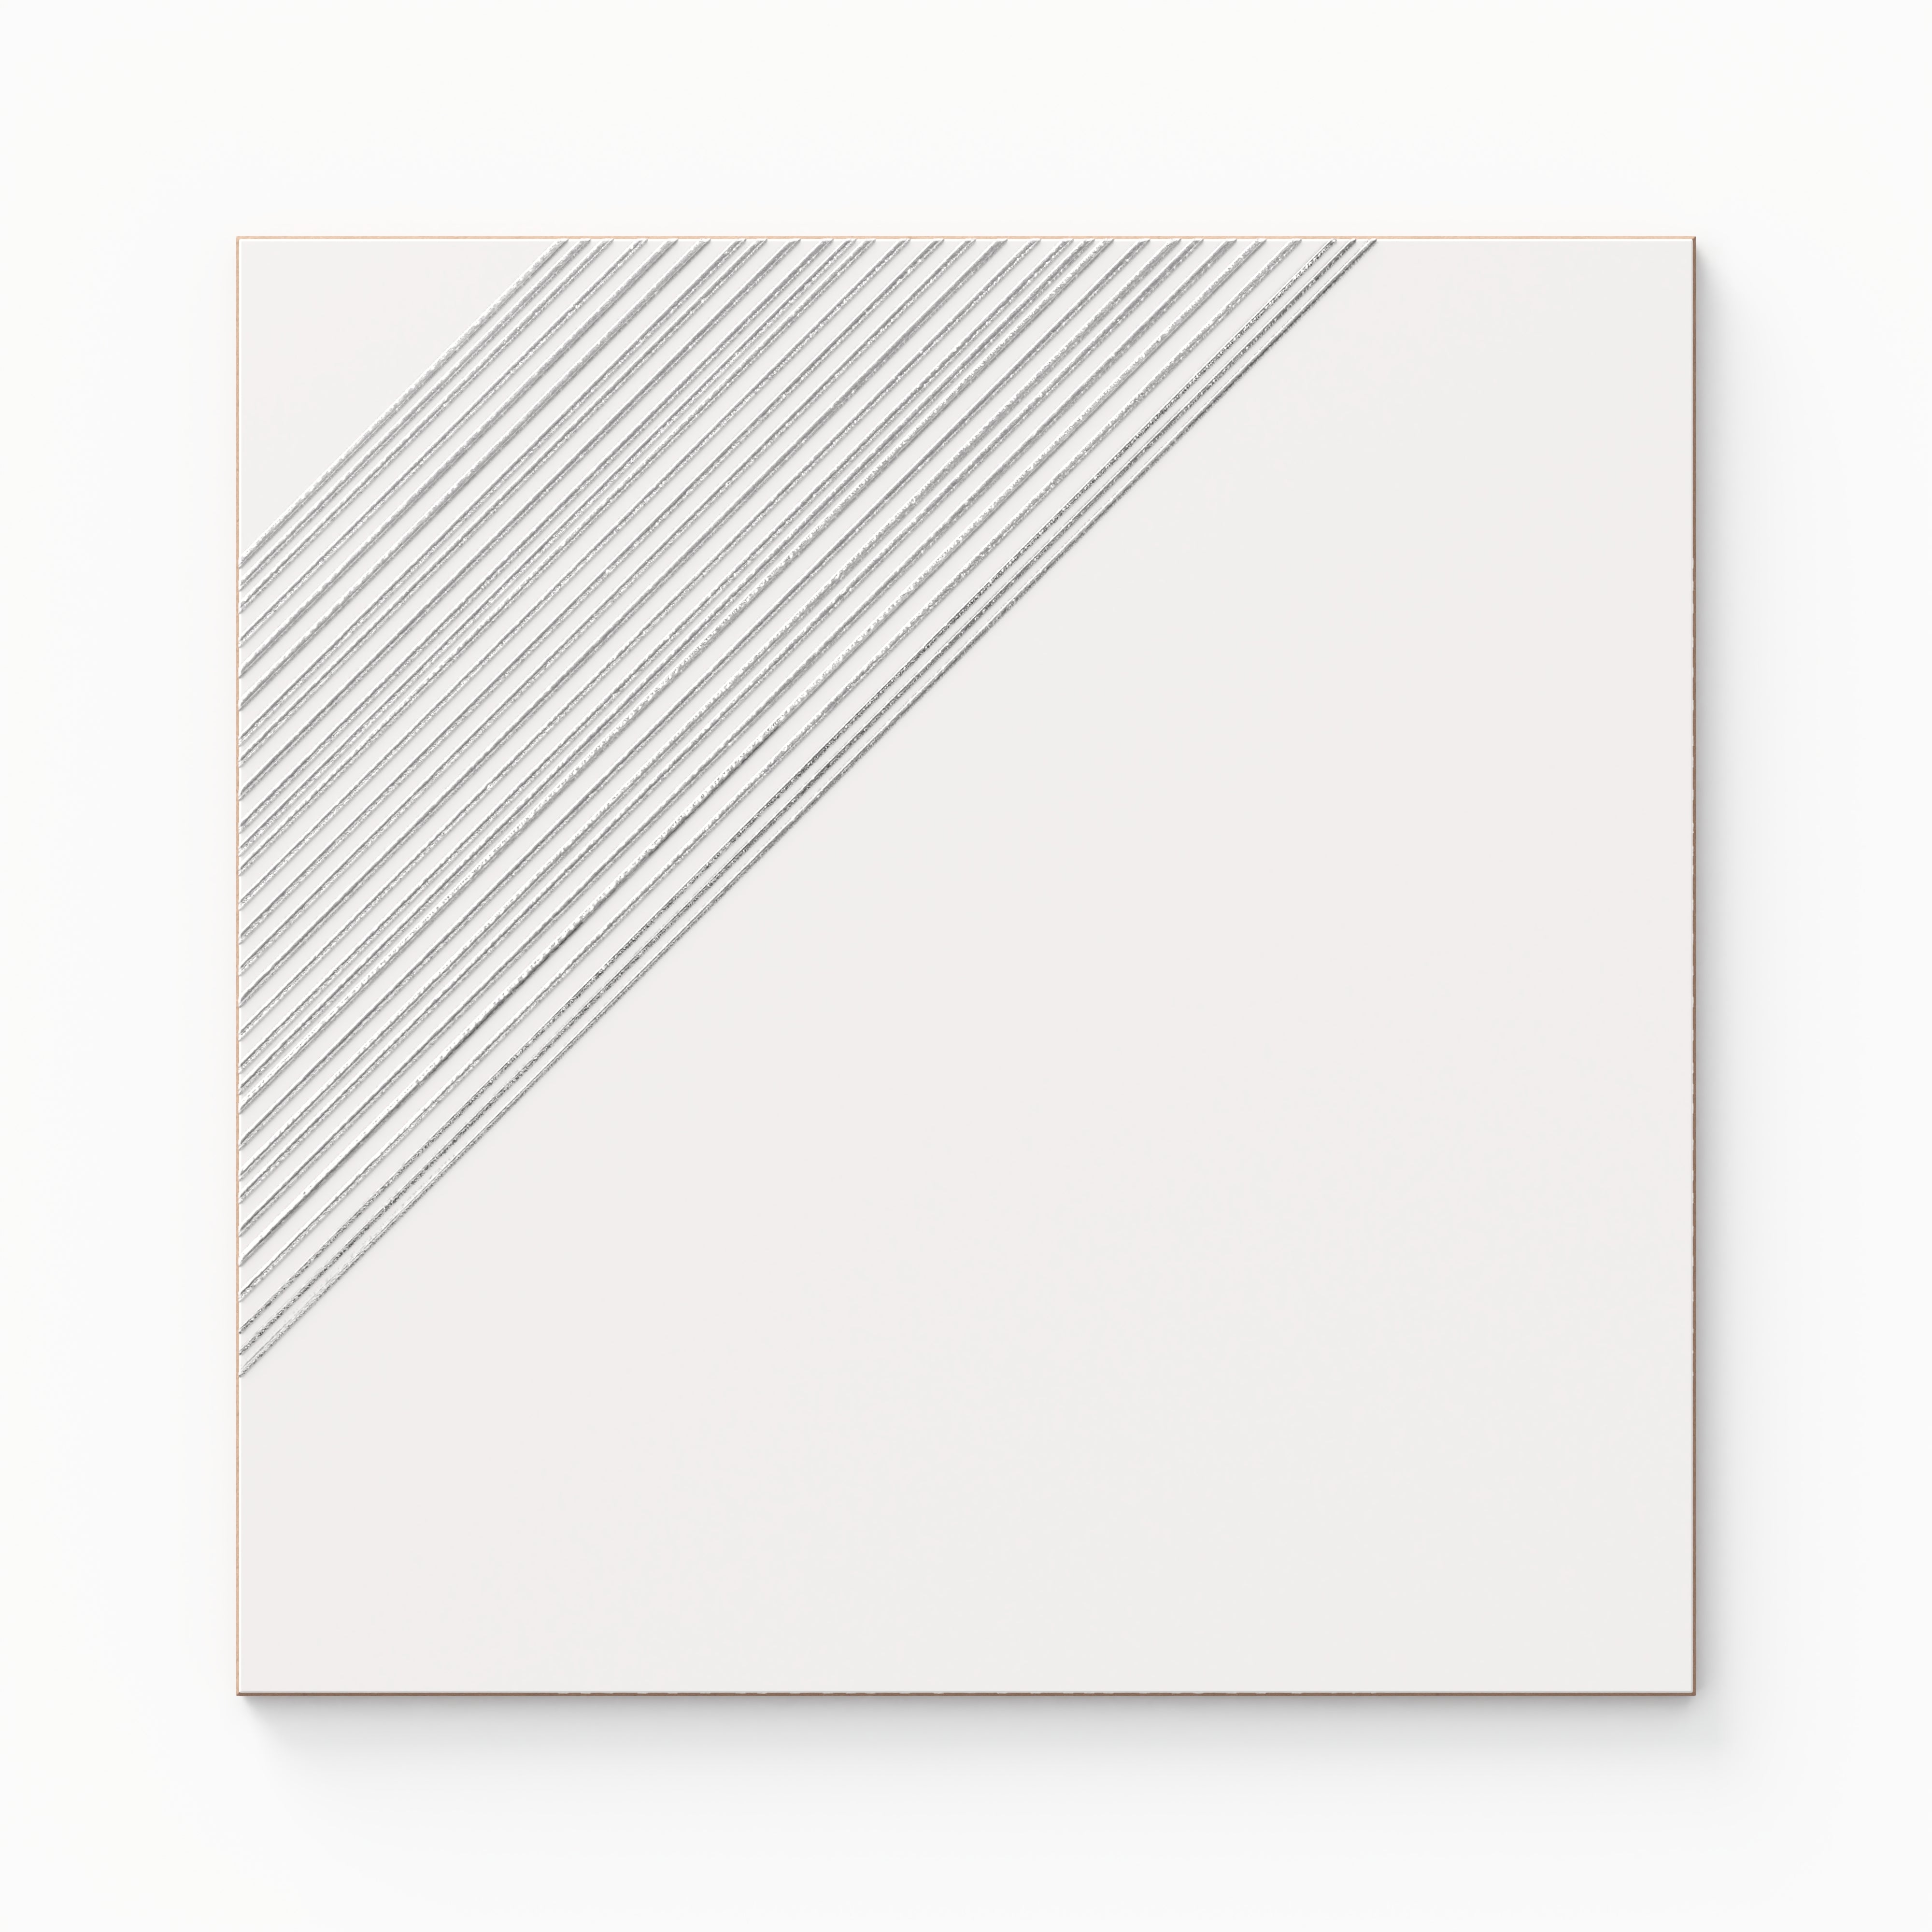 Estelle 12x12 Satin Ceramic Tile in Deco 3 White Silver